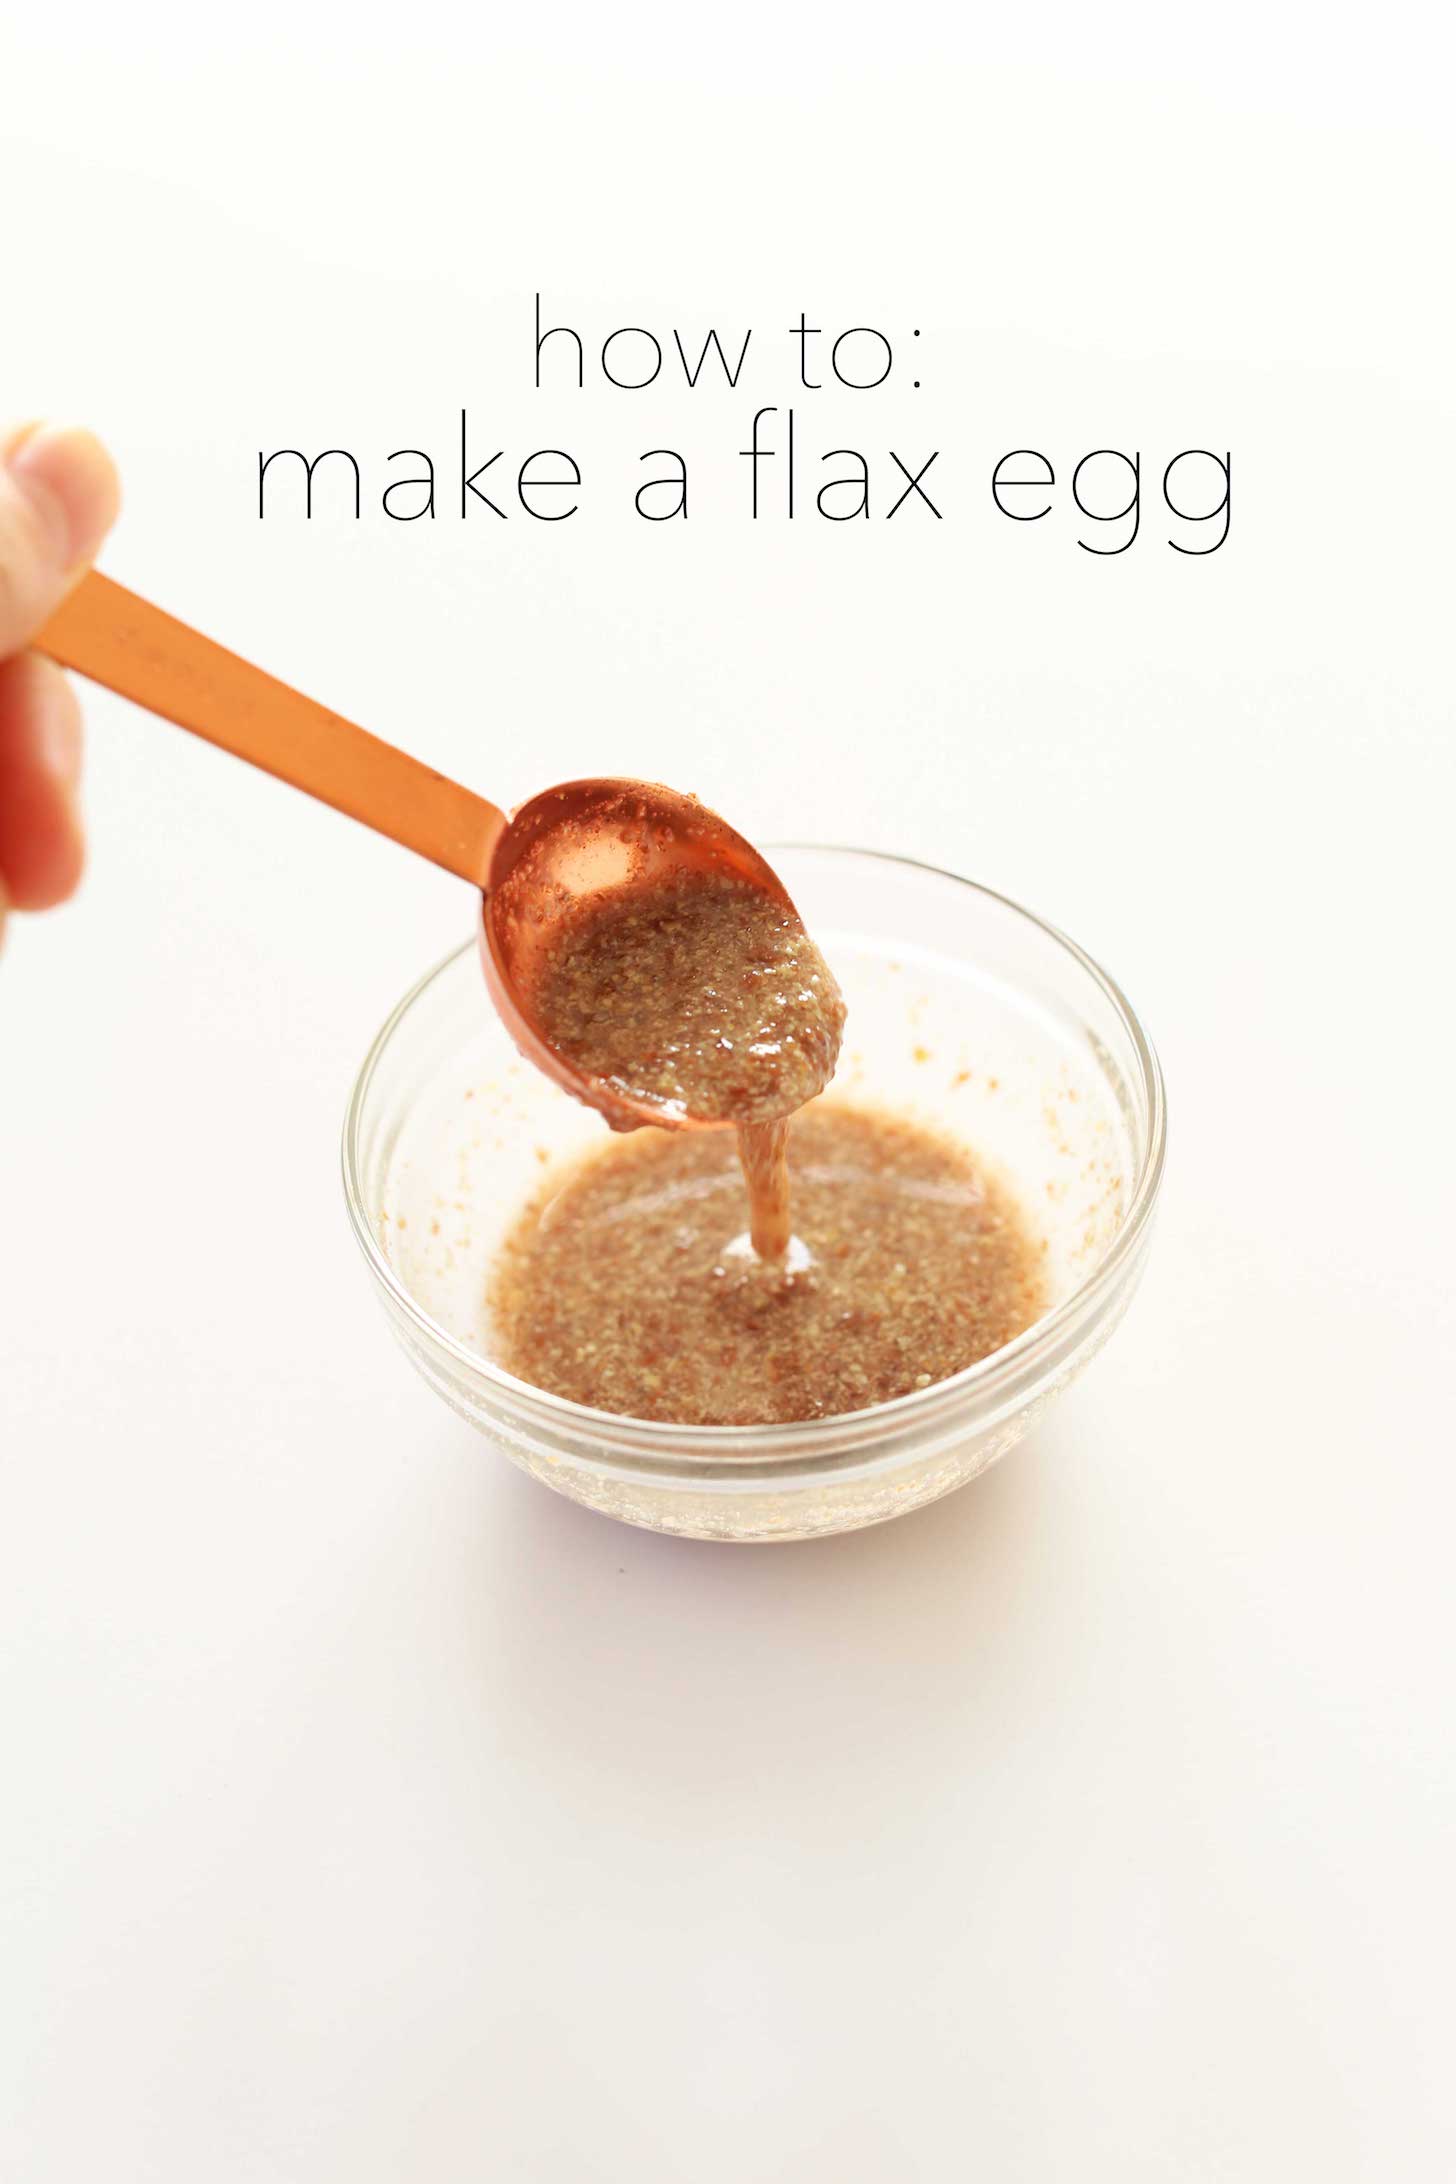 https://minimalistbaker.com/wp-content/uploads/2020/05/How-to-Make-a-Flax-Egg.jpg